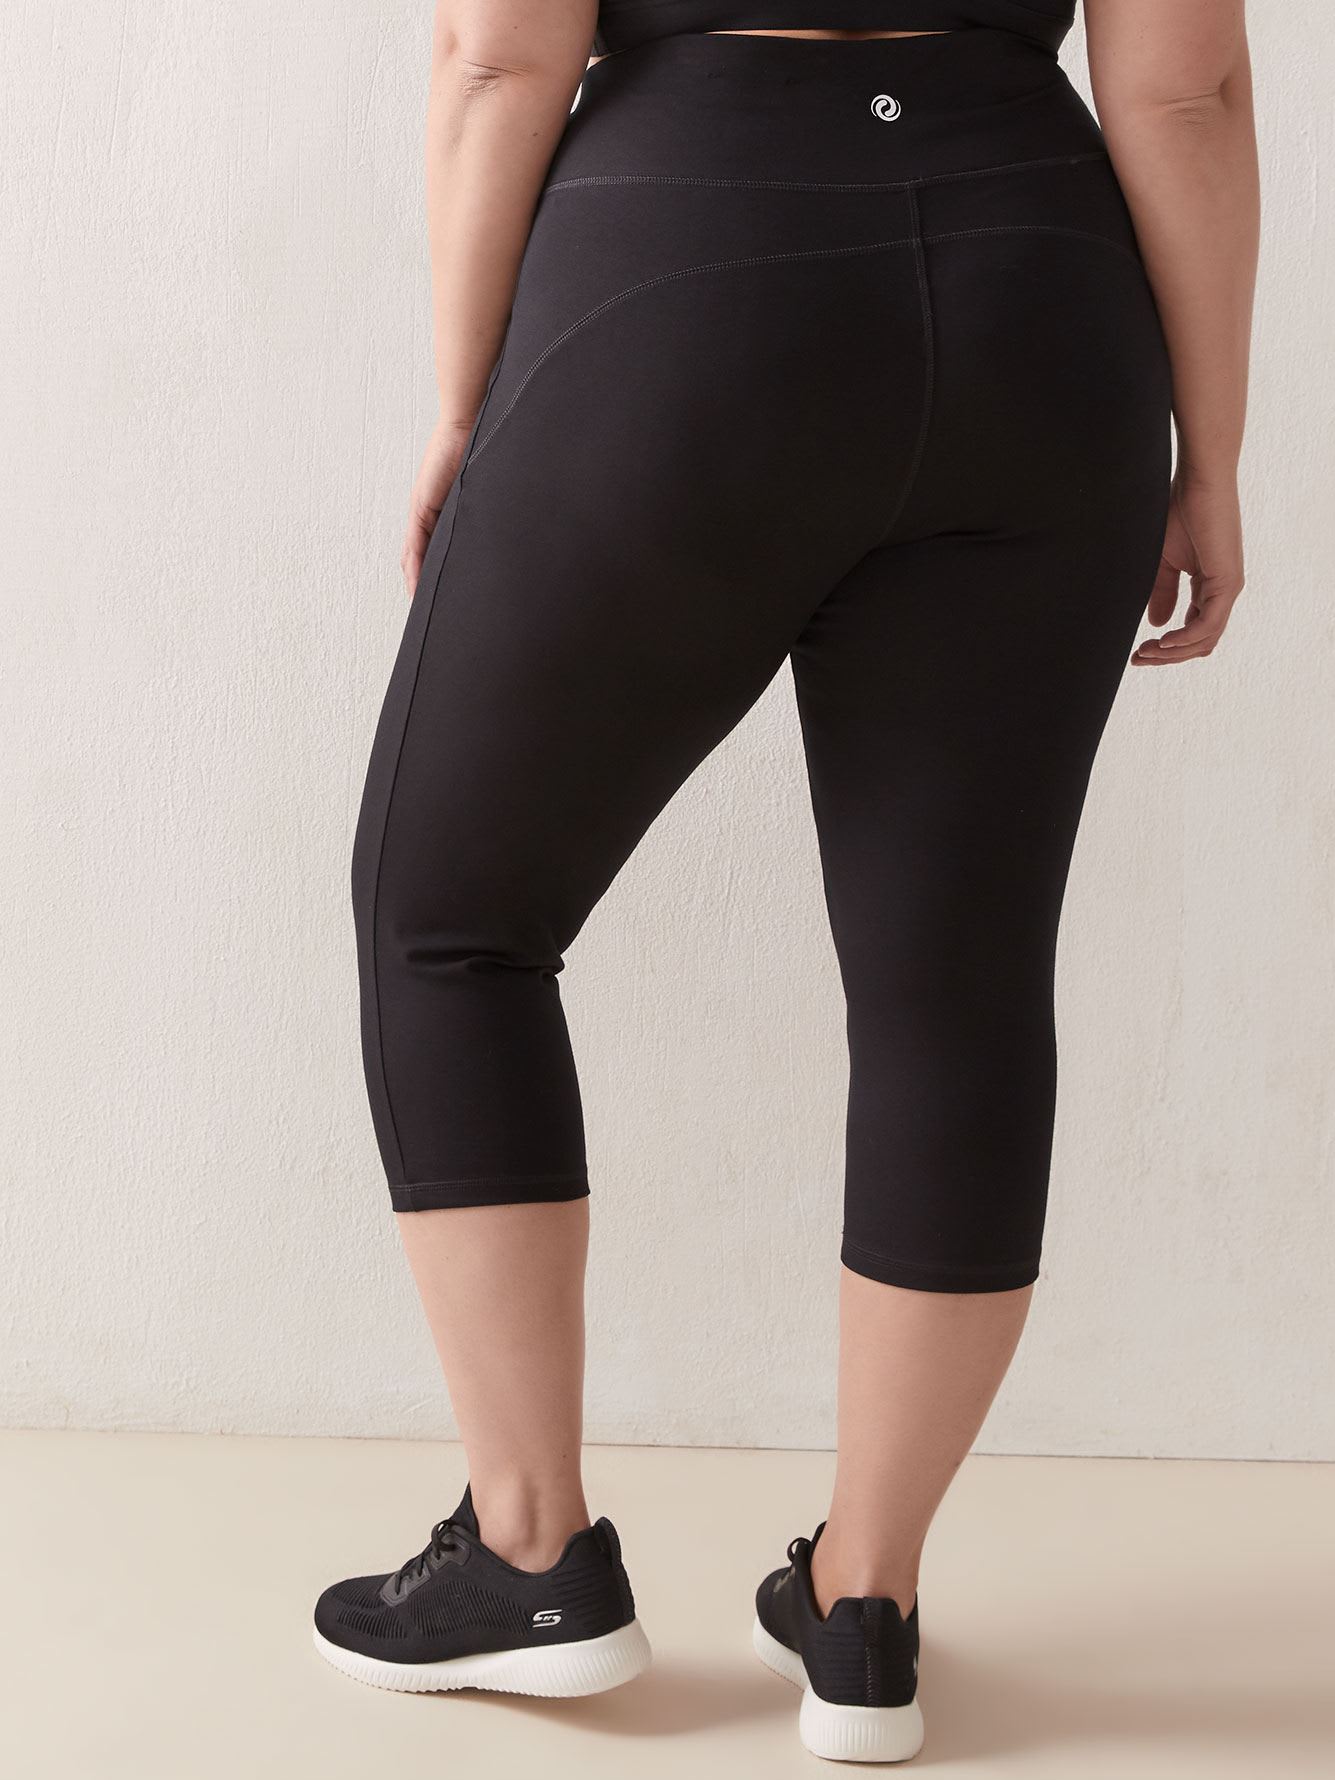 Lululemon Women's Align High-Rise Crop Leggings 22” in Black - Size 2 - $35  - From Nicole